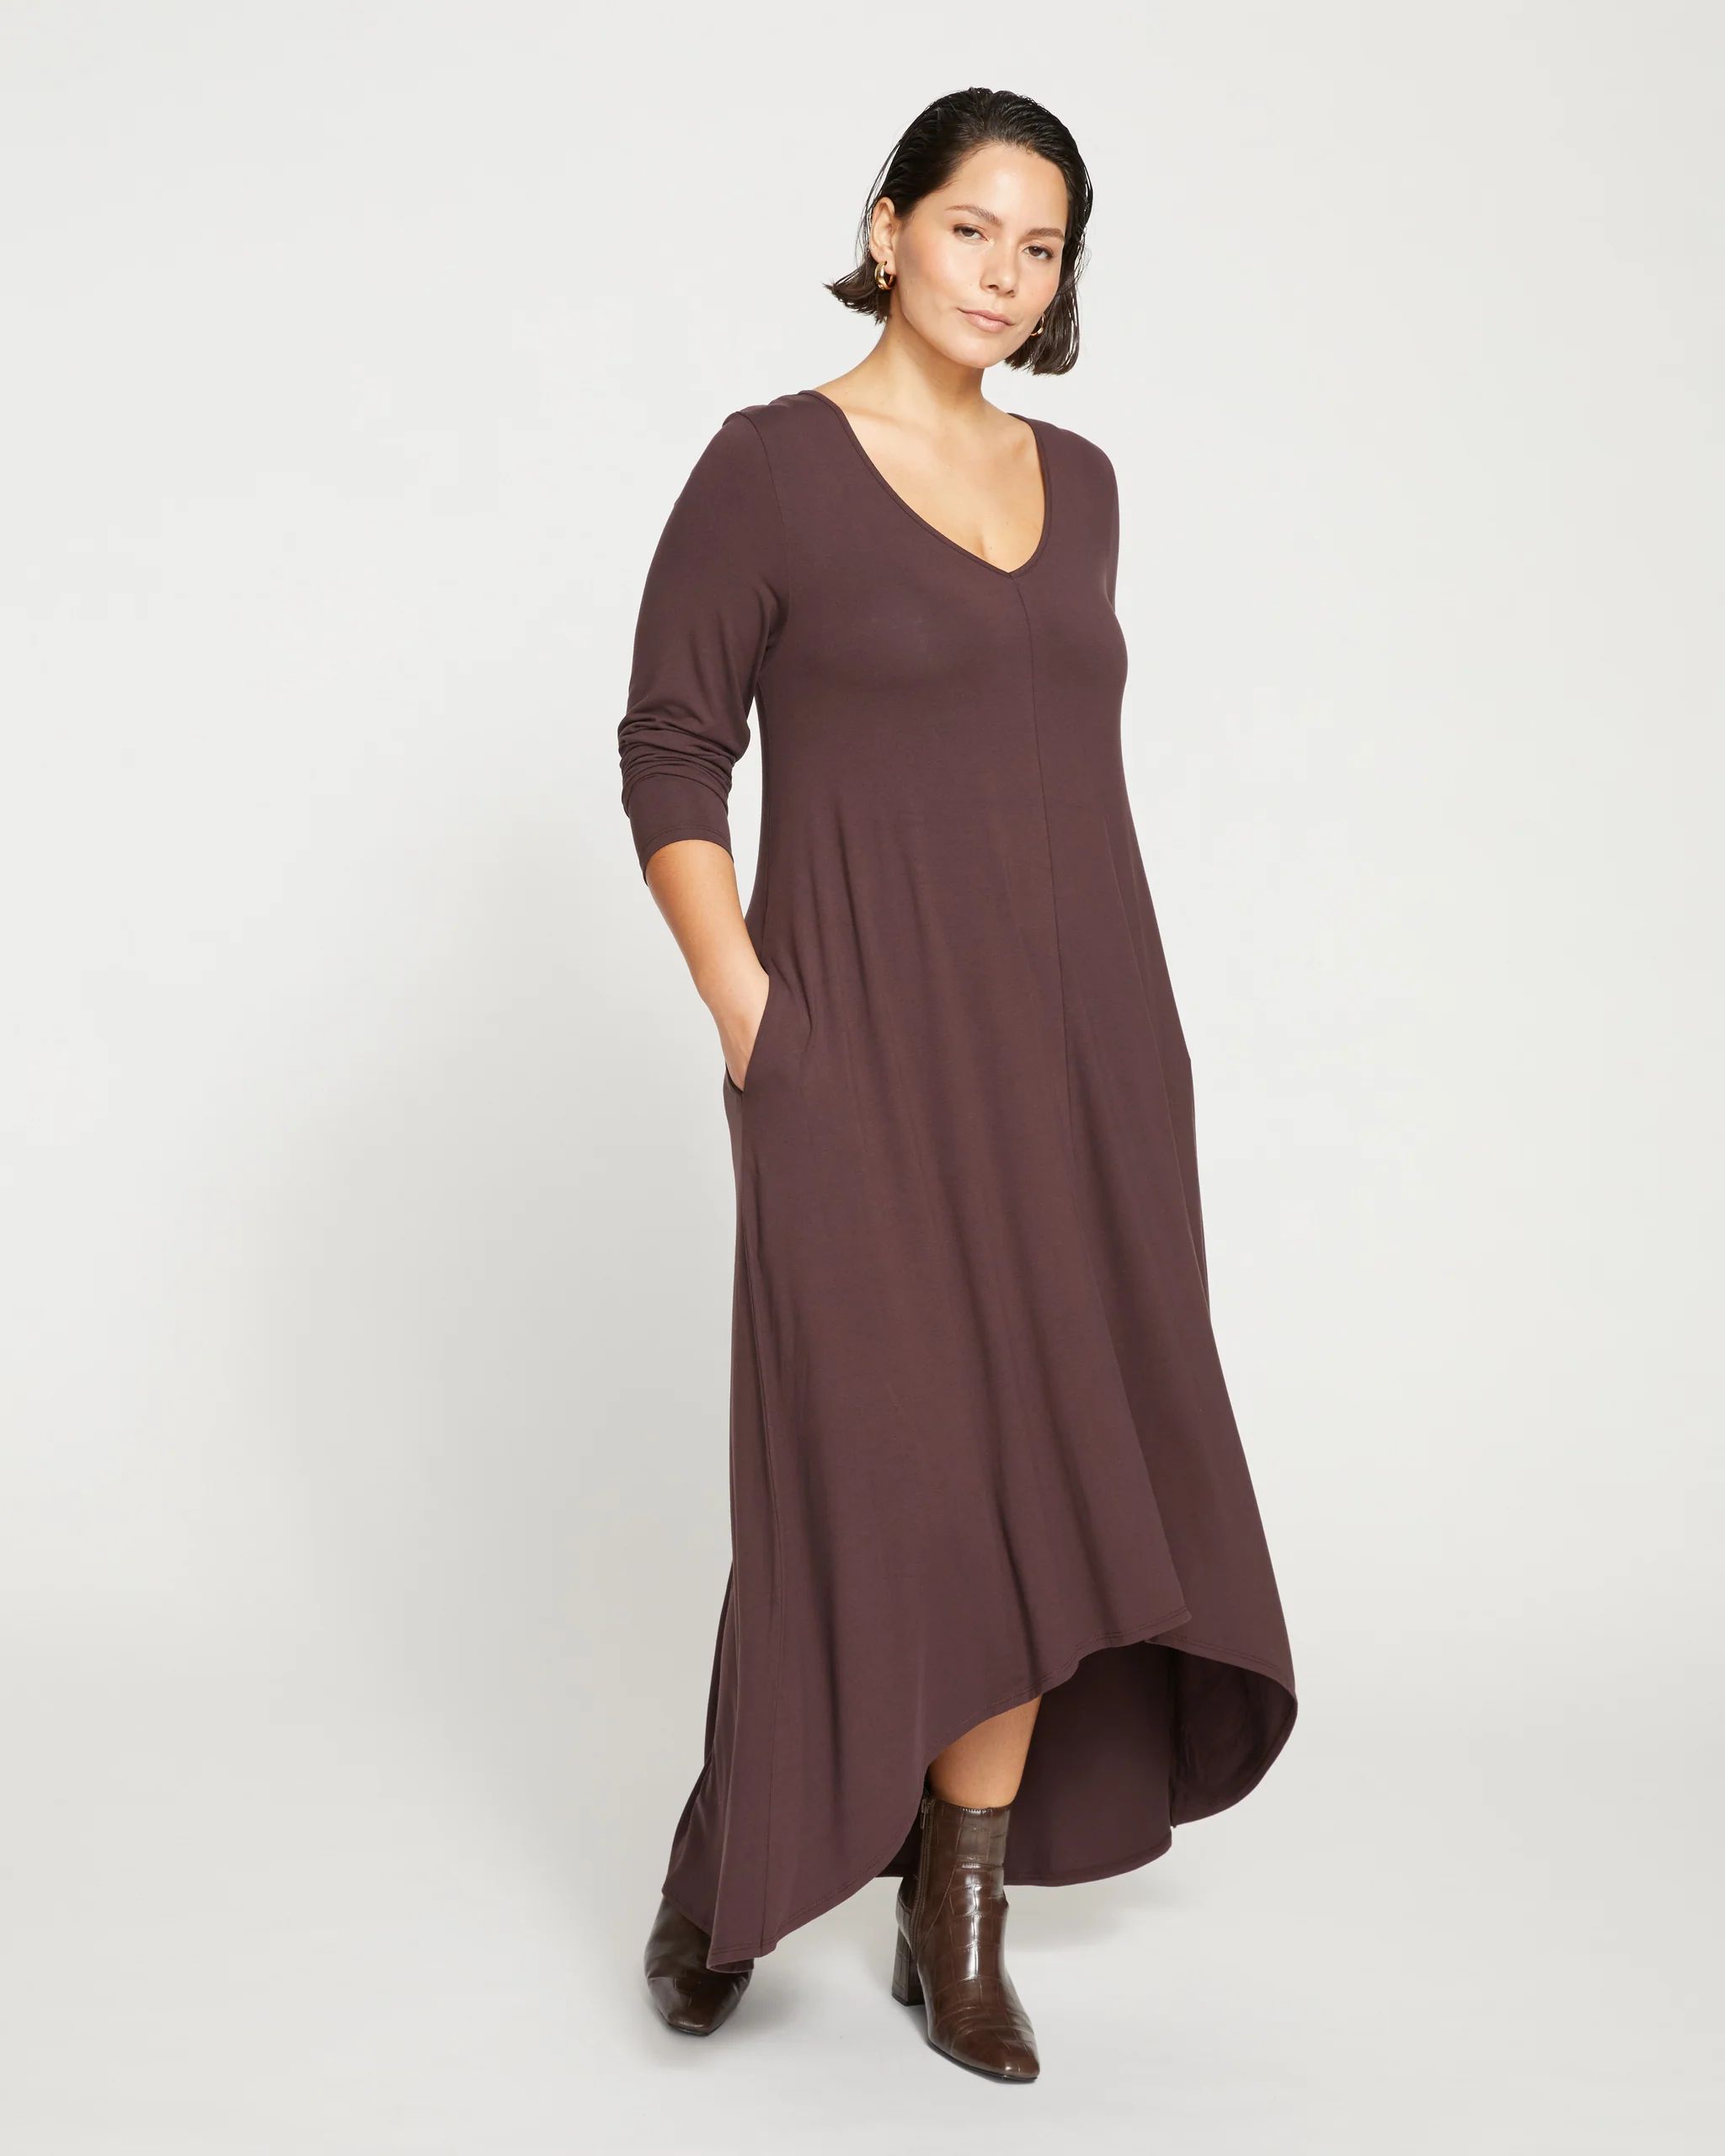 Athena Long Sleeve Divine Jersey Dress - Burnished Brown | Universal Standard